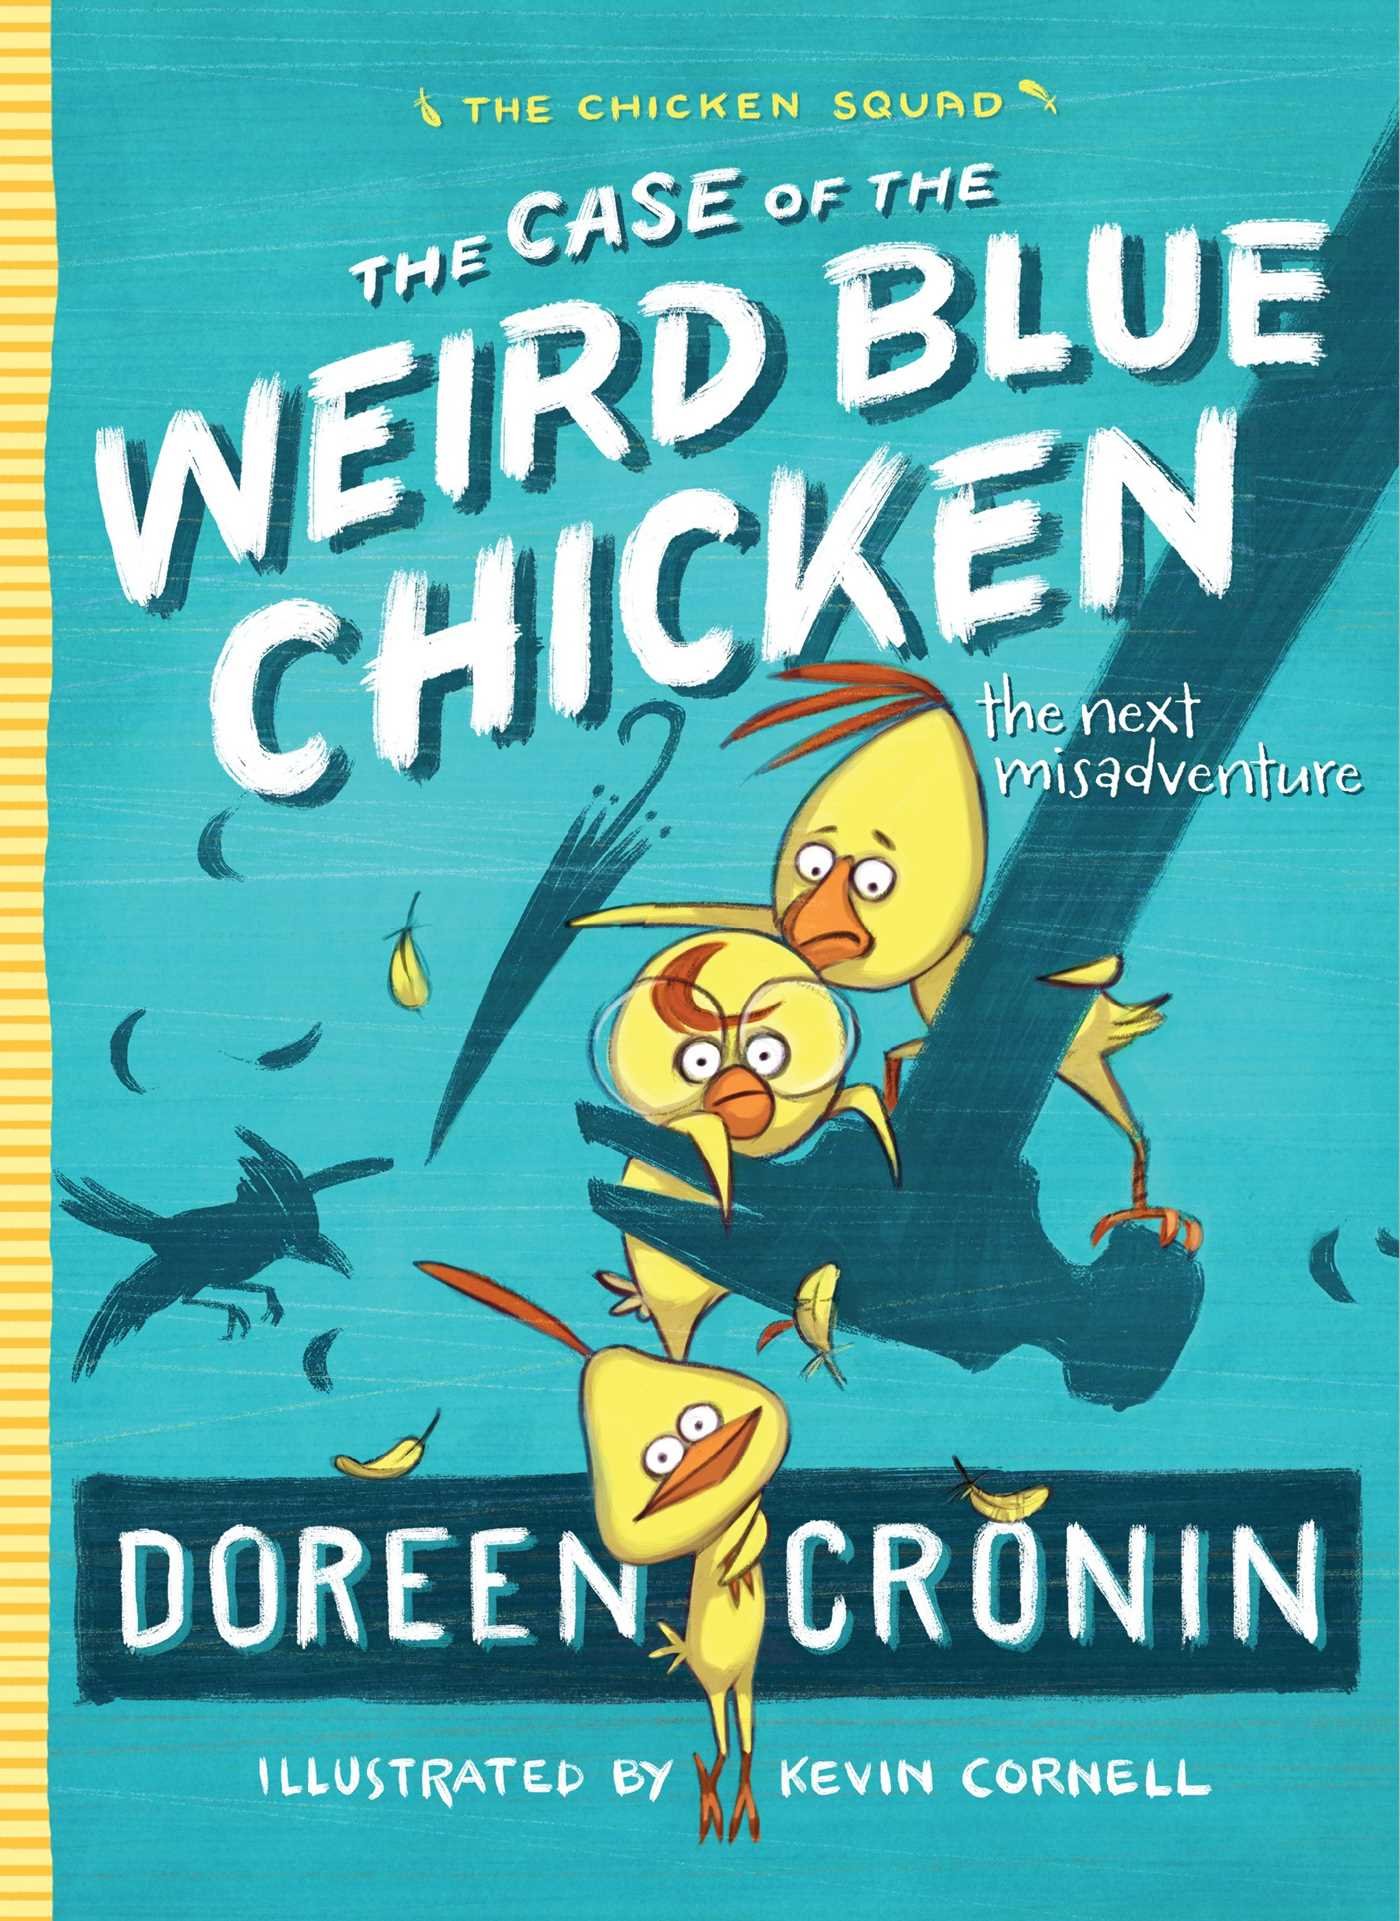 "The Case of the Weird Blue Chicken" by Doreen Cronin